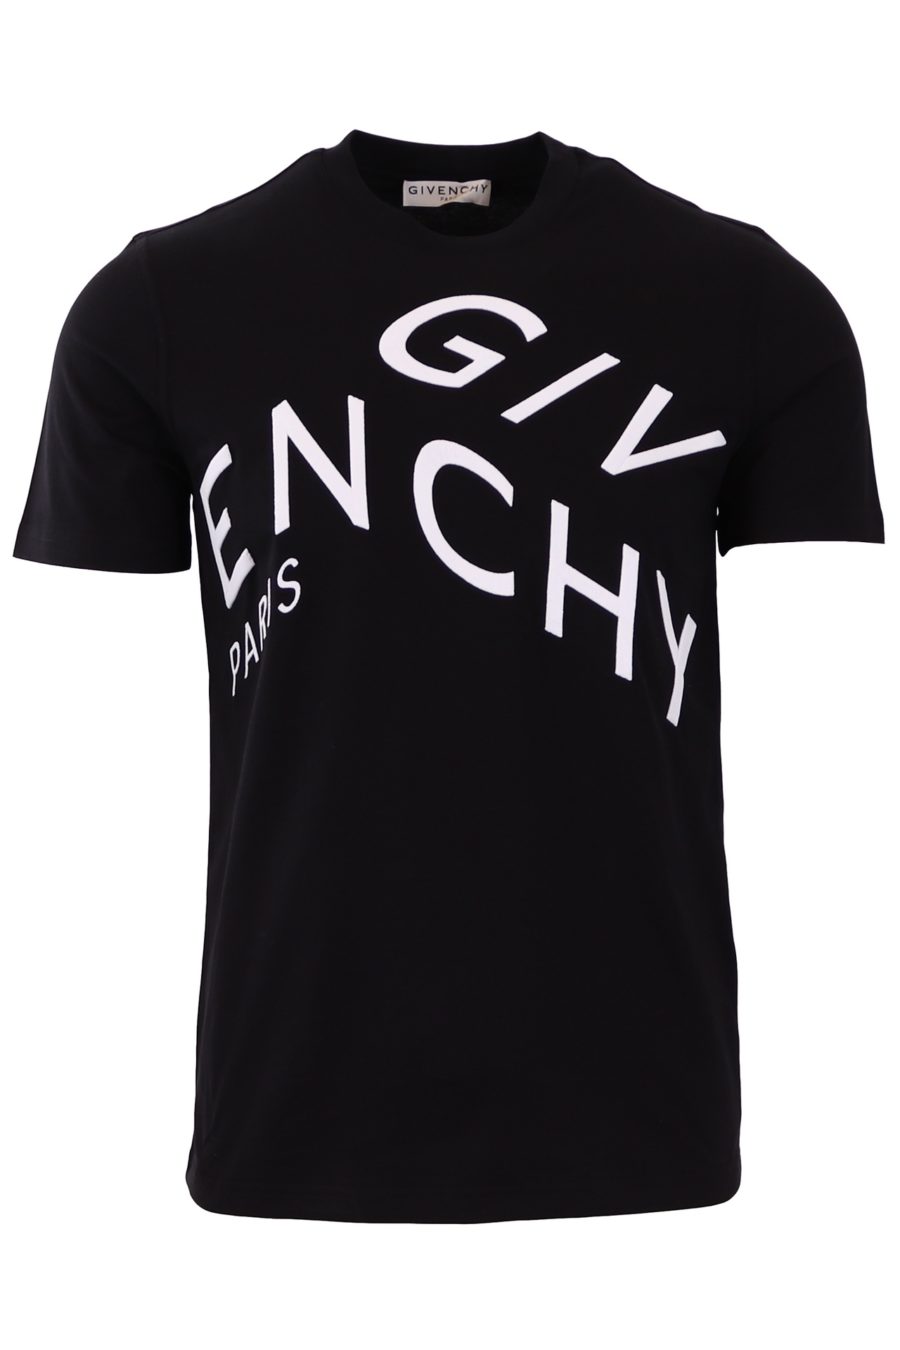 Givenchy T-shirt schwarz slim fit gesticktes Logo - cf4733a05eb4e06fb4b130d0789d14d313ff3d55